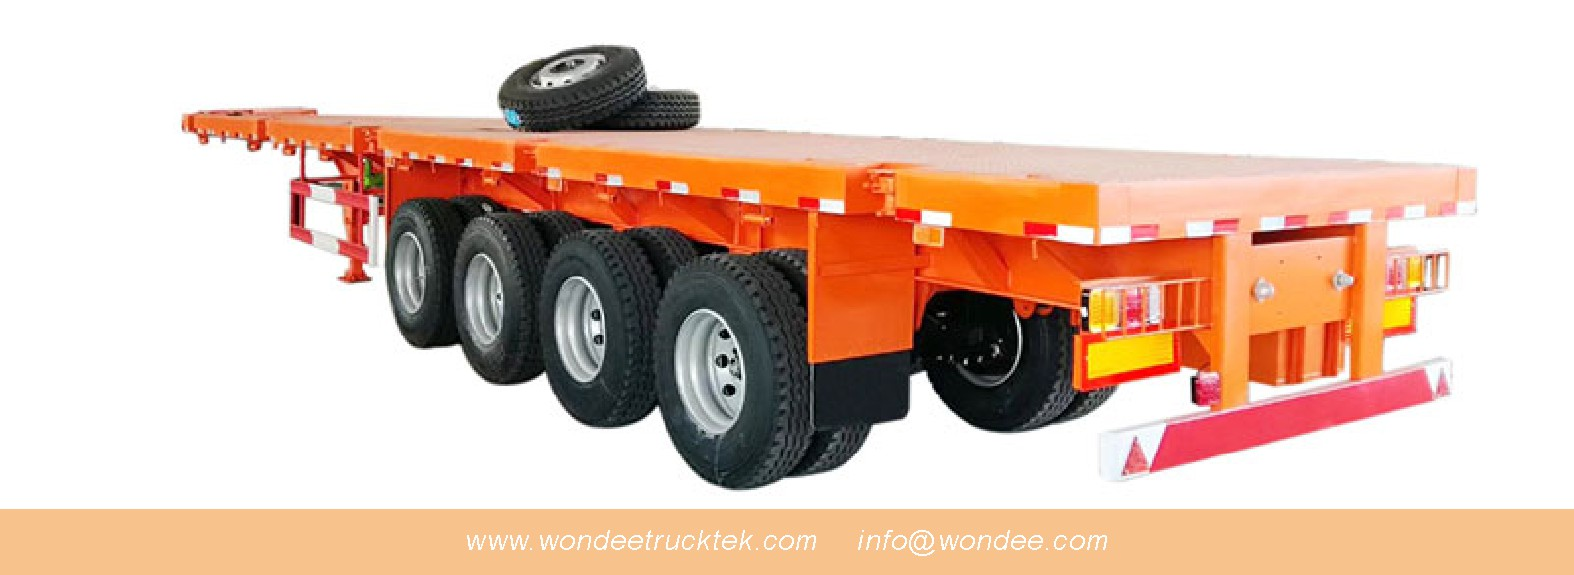 WONDEE 2-axle 40 T Flatbed Semi Trailer